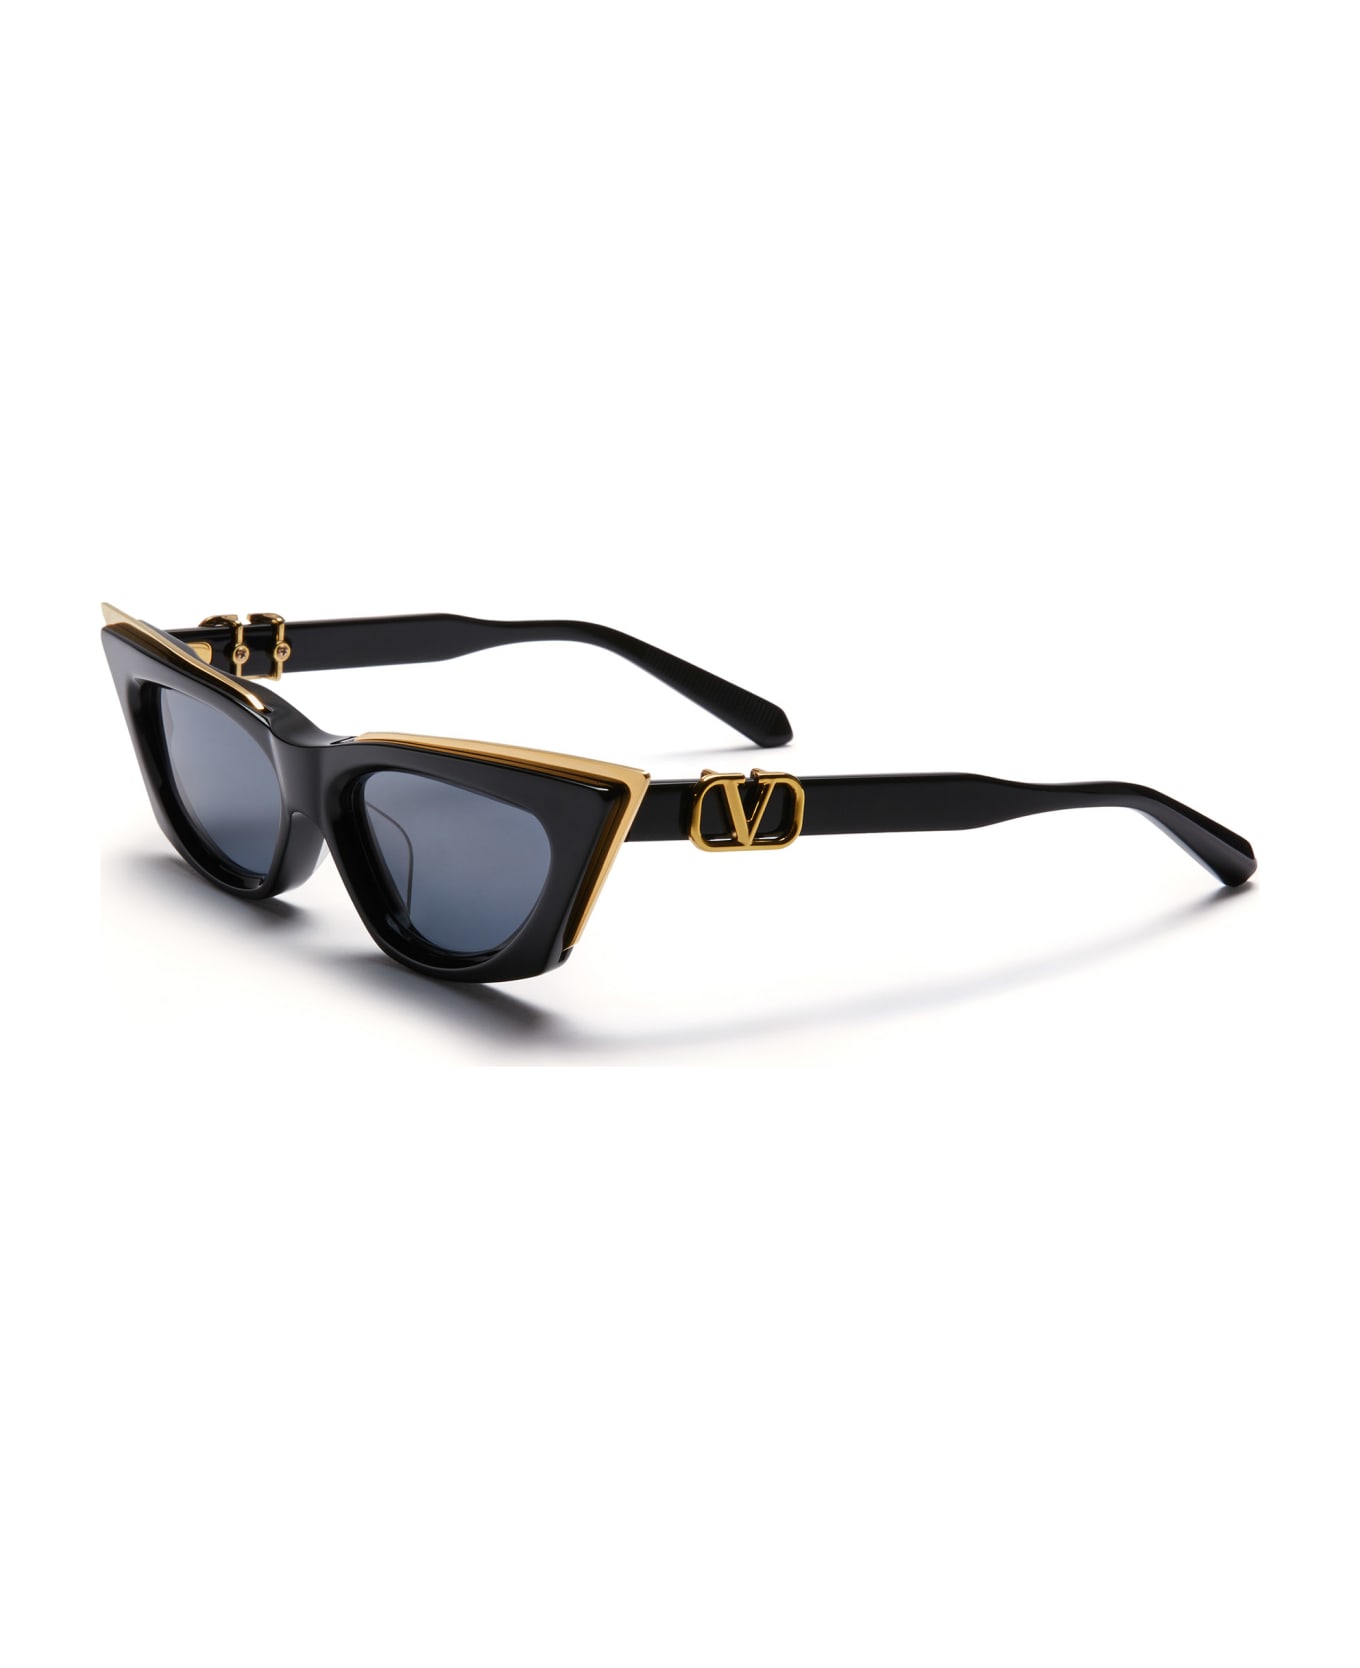 Valentino Eyewear V-goldcut I - Black / Yellow Gold Sunglasses - Black/gold